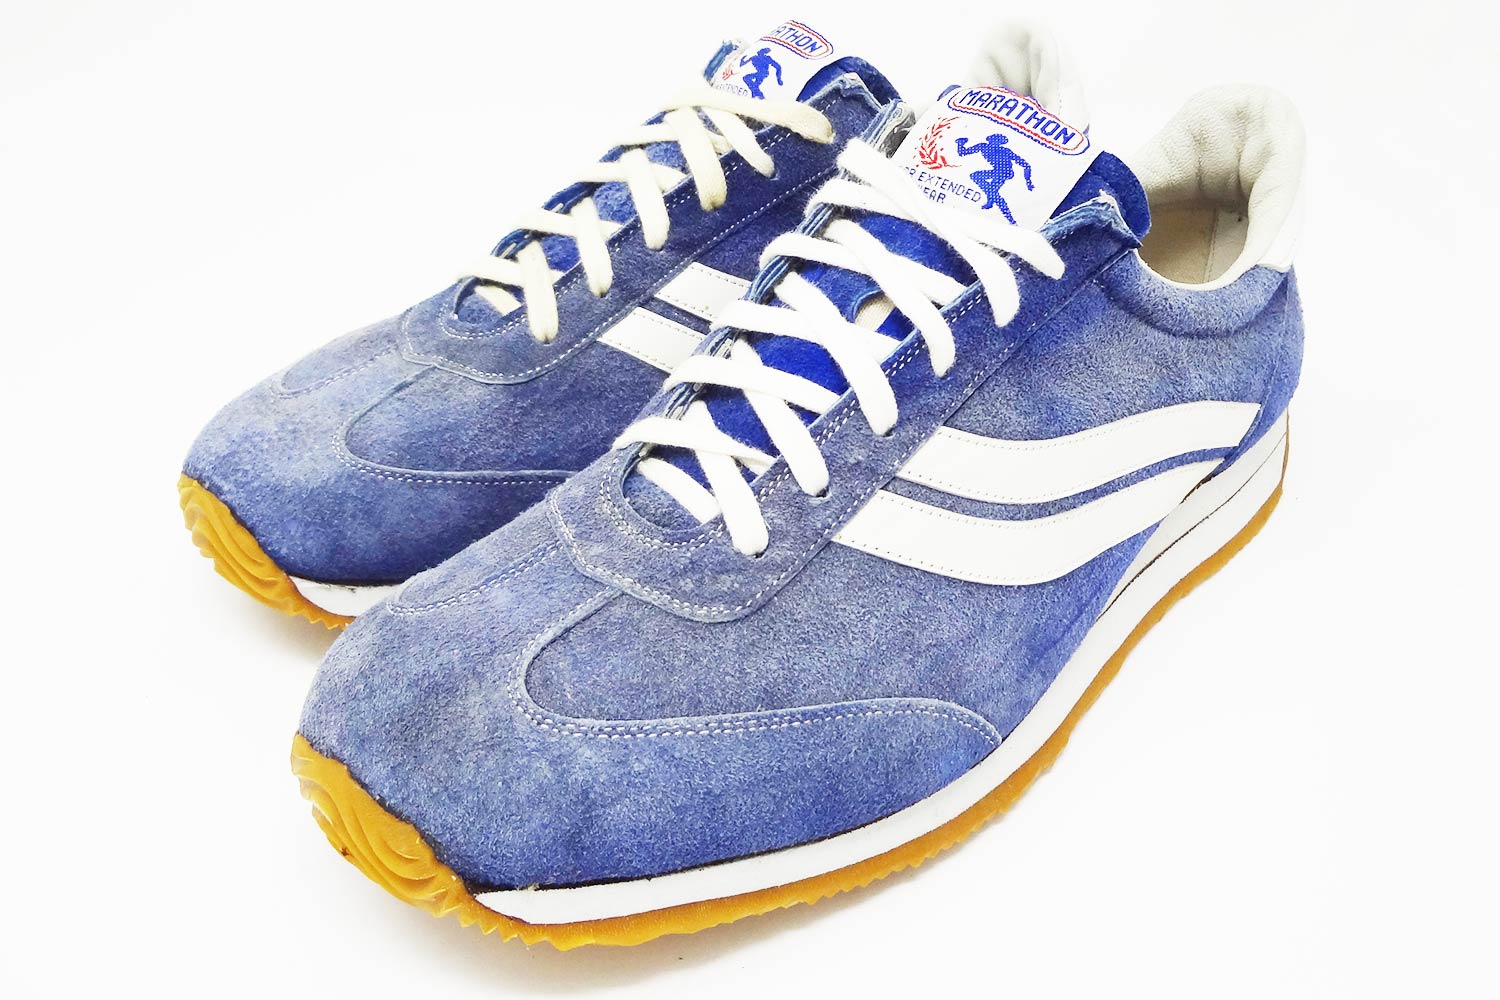 Obscure Marathon brand 70s 80s vintage sneakers @ The Deffest